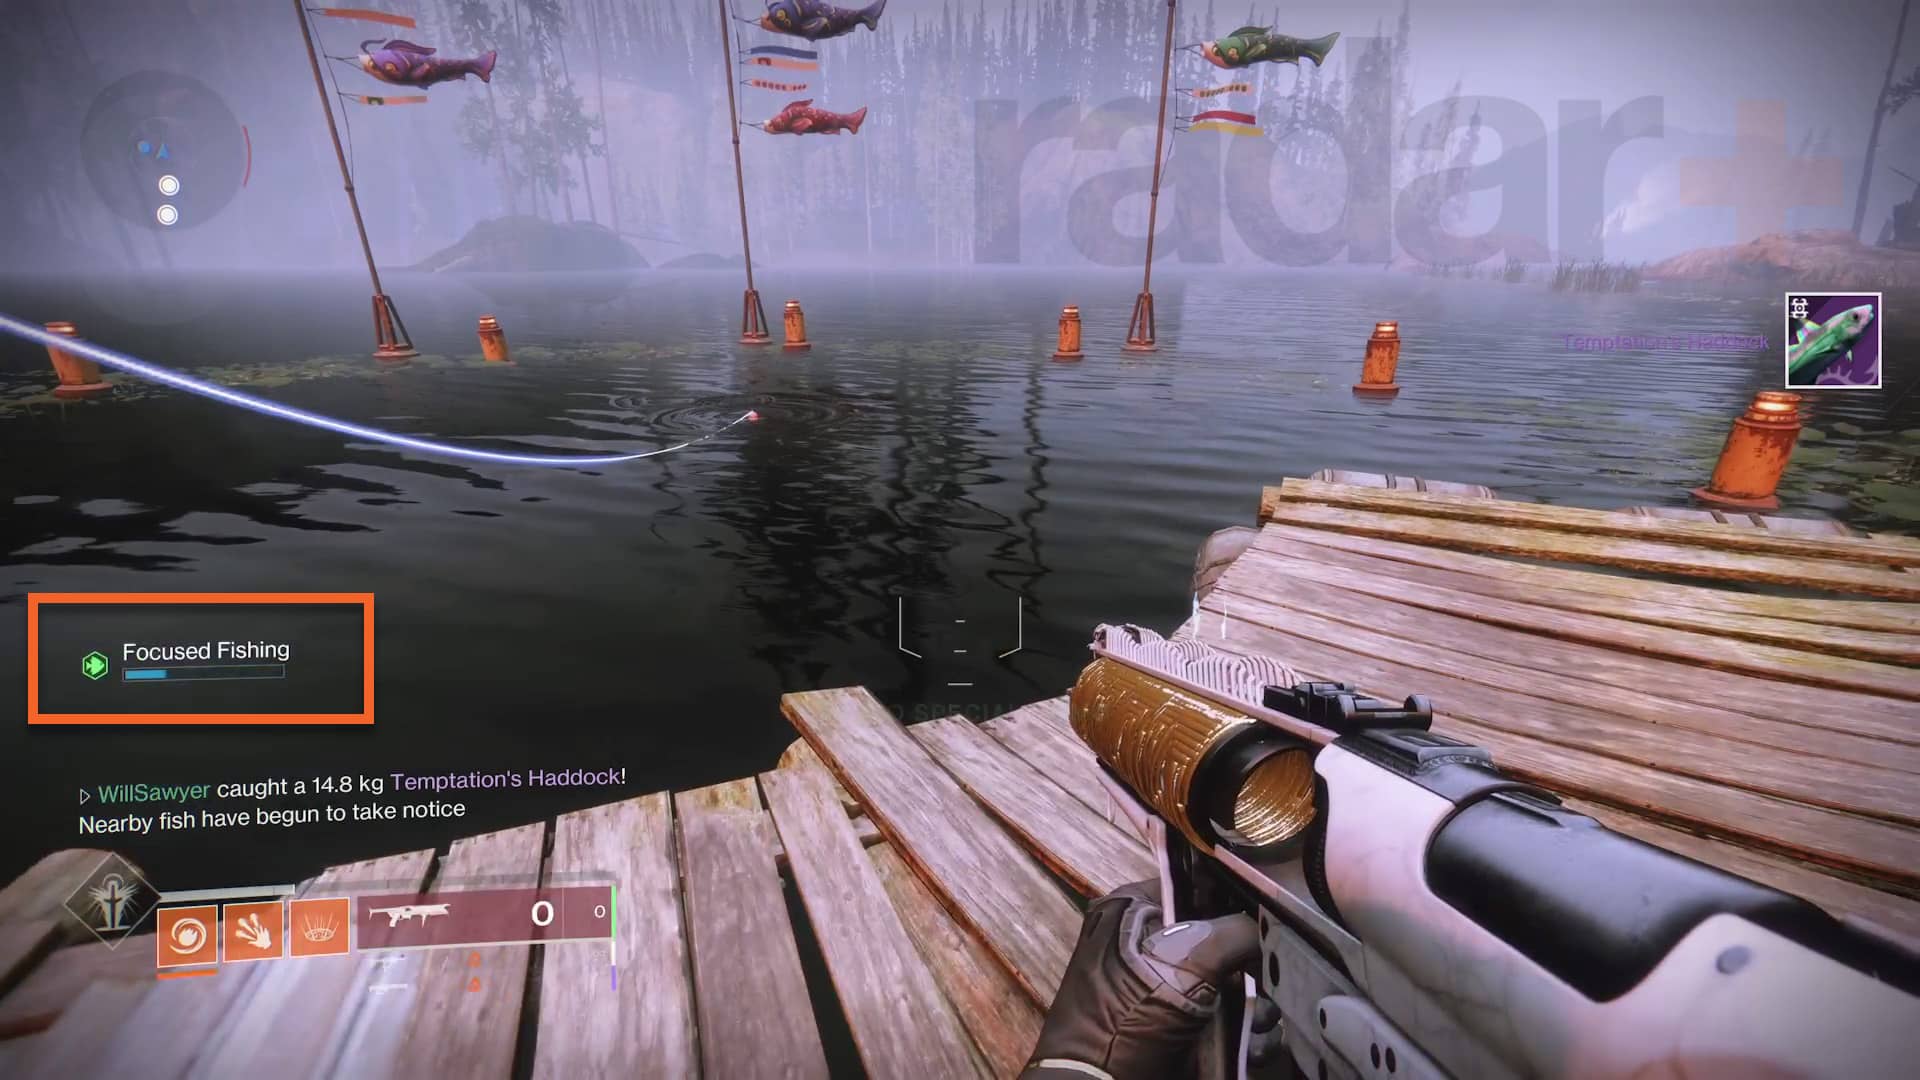 Destiny 2 Season of the Deep Fishing Focused Fishing mètre mis en évidence dans la boîte orange